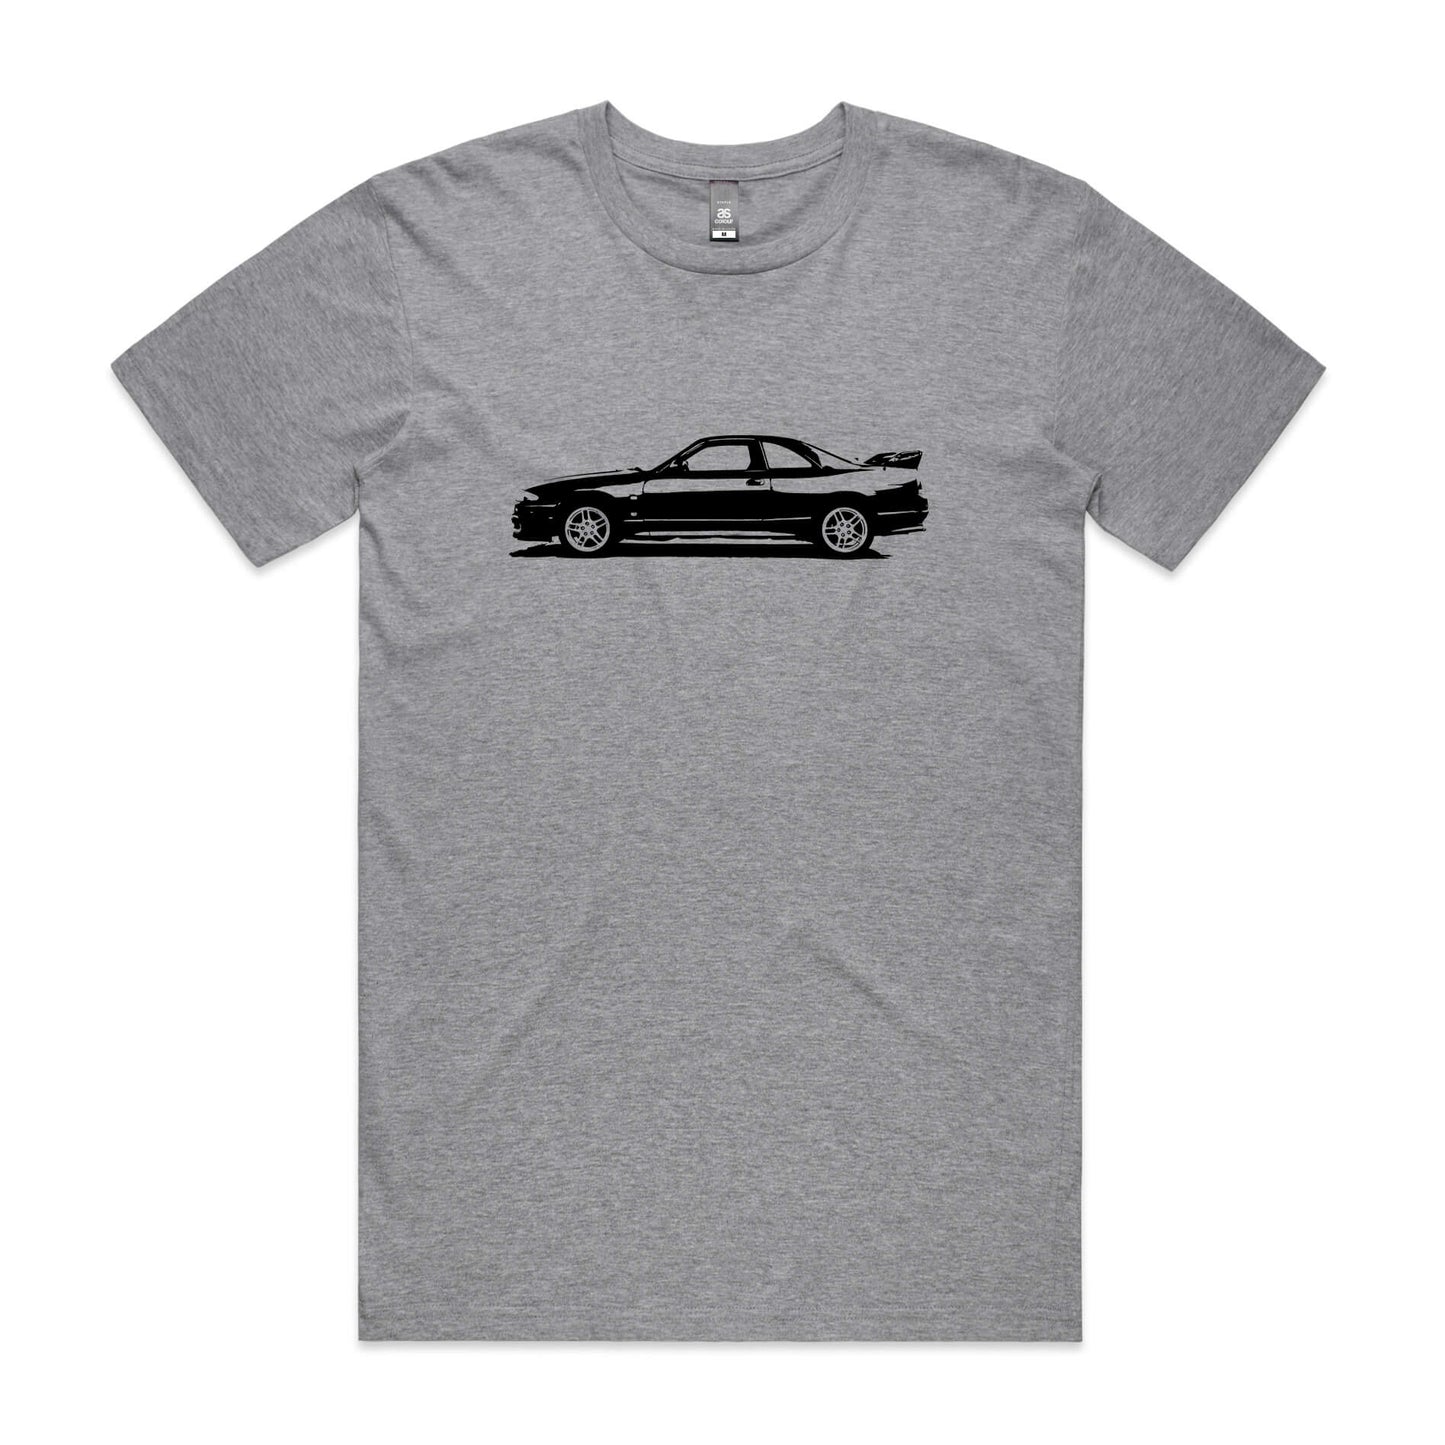 Nissan R33 GT-R Skyline T-Shirt